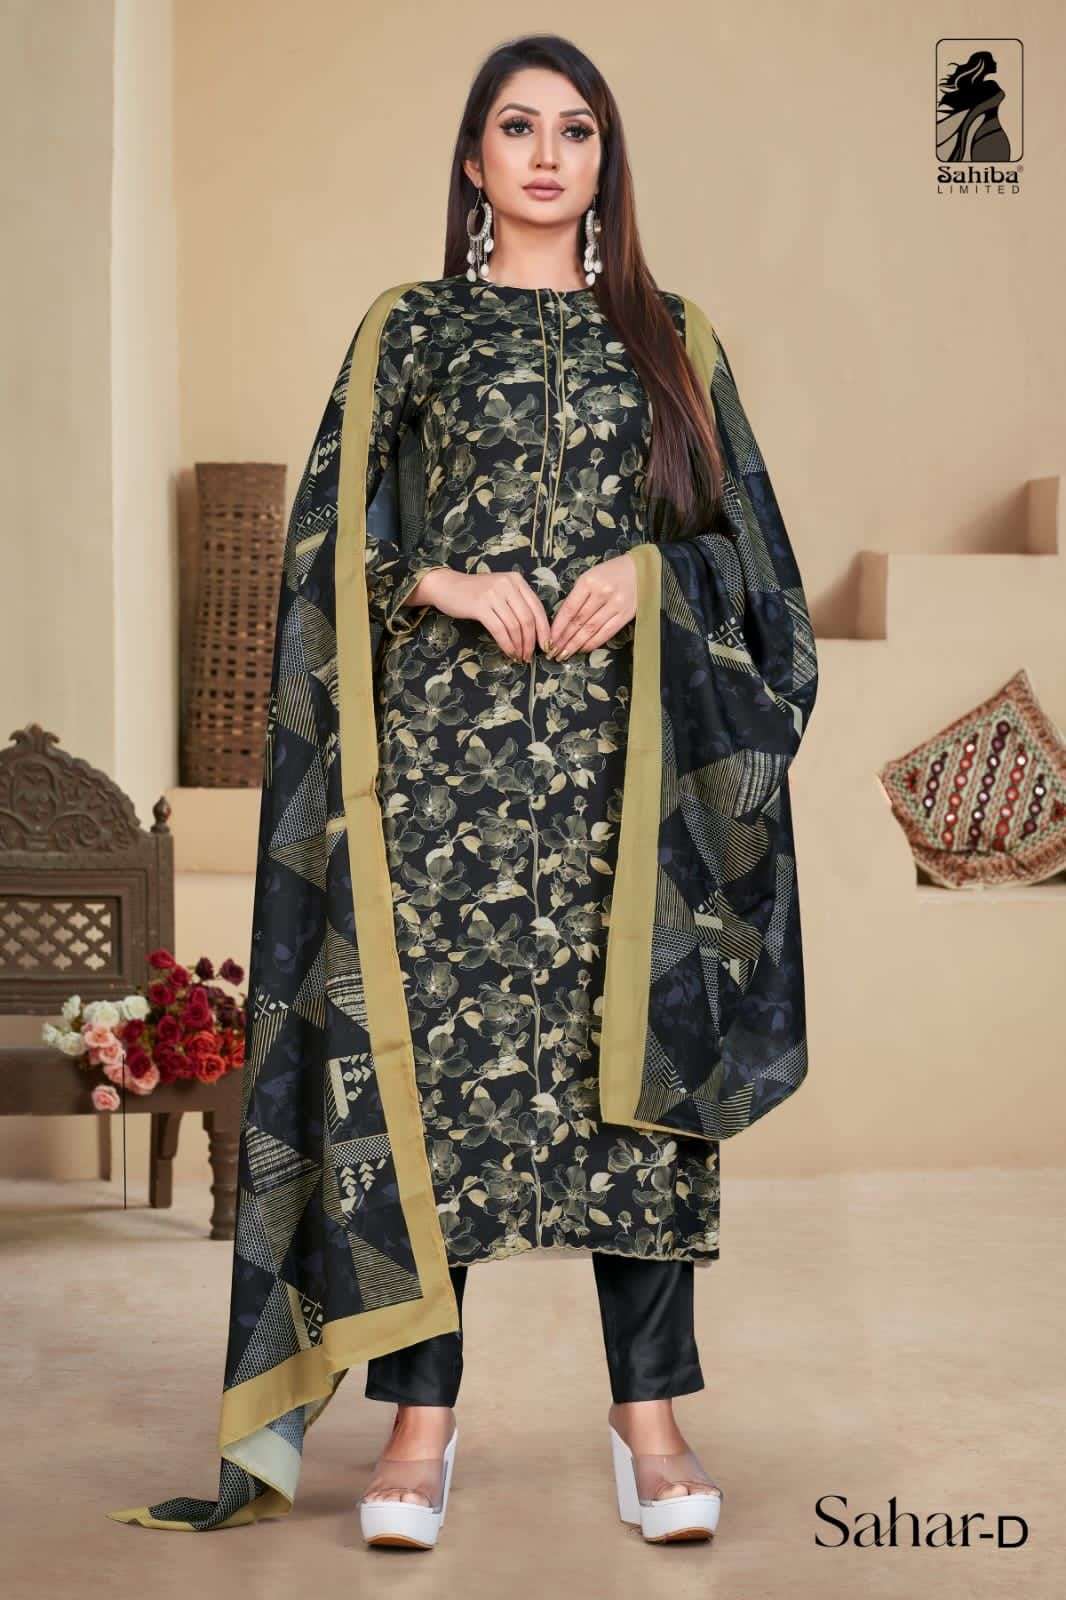 Sahiba Sahar Digital Printed cotton Satin with Embroidery Wo...